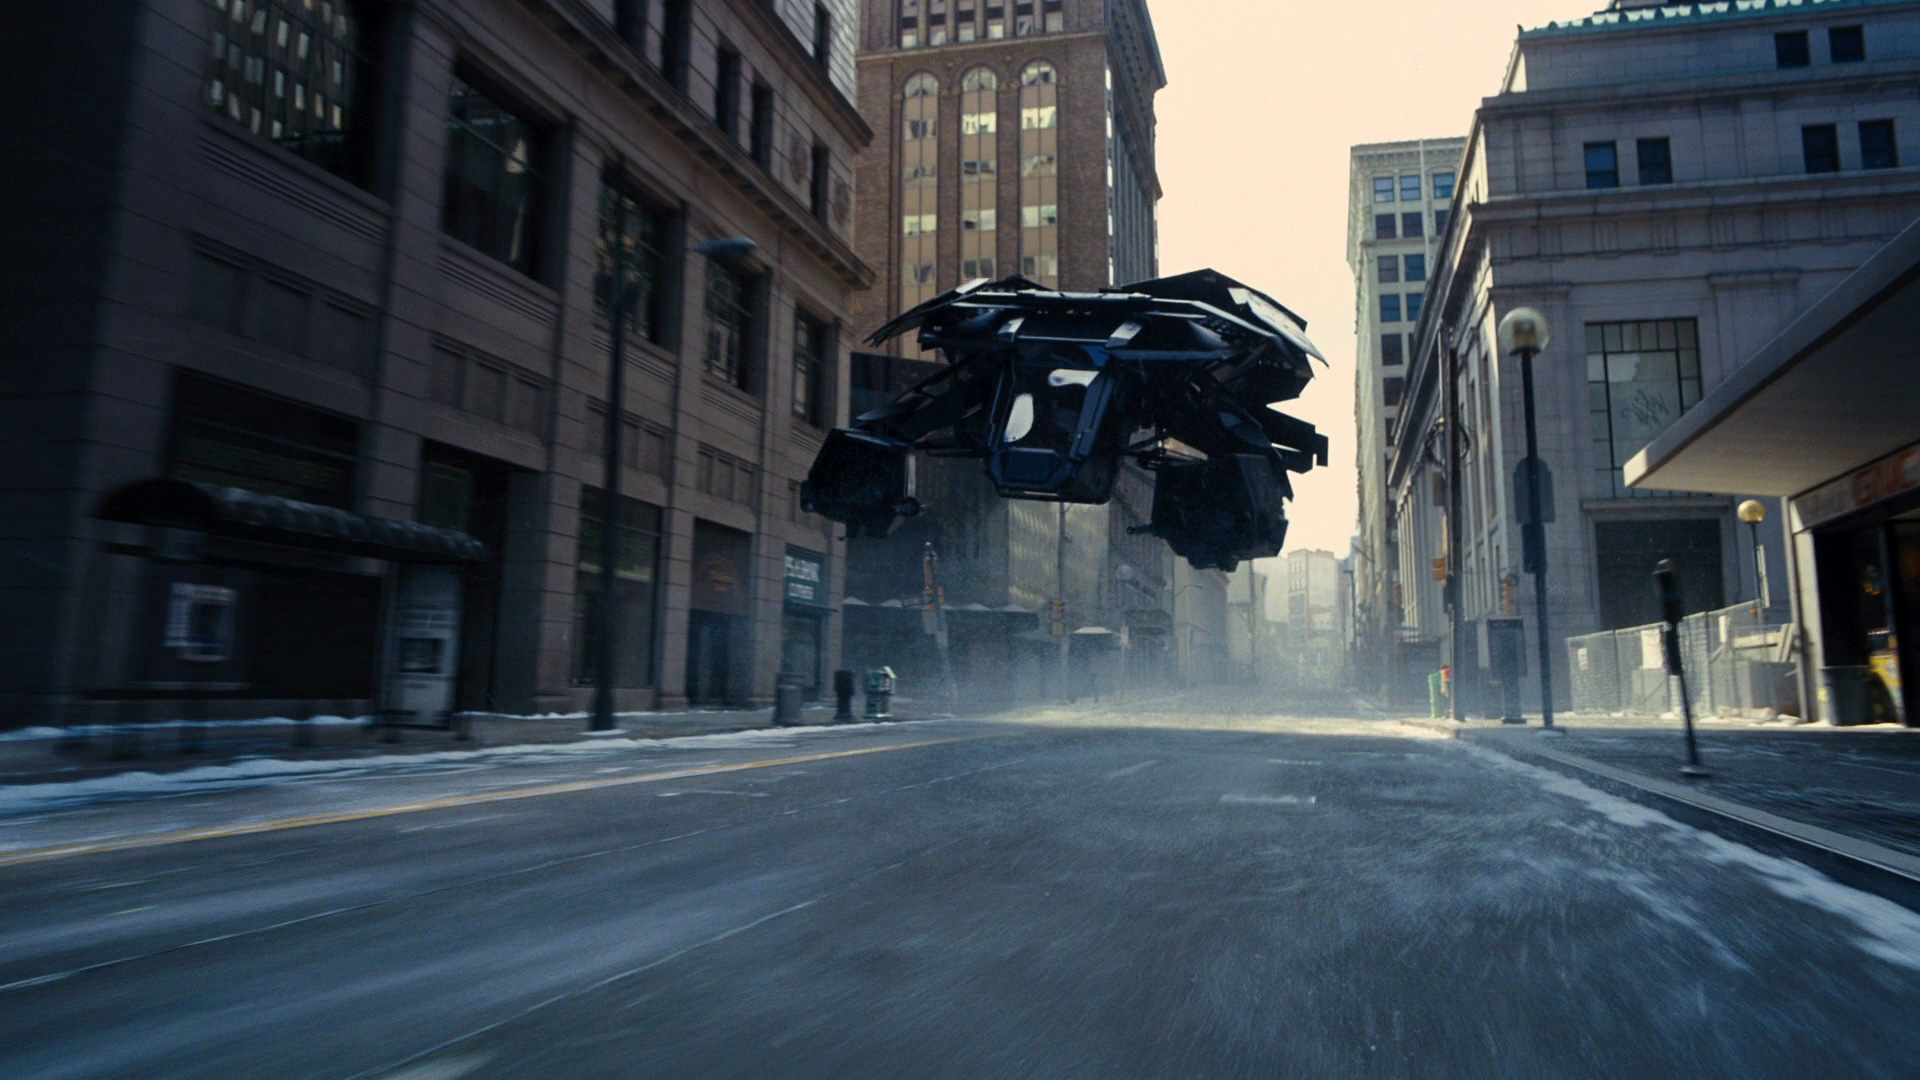 Batman The Dark Knight Rises The Bat Vehicle